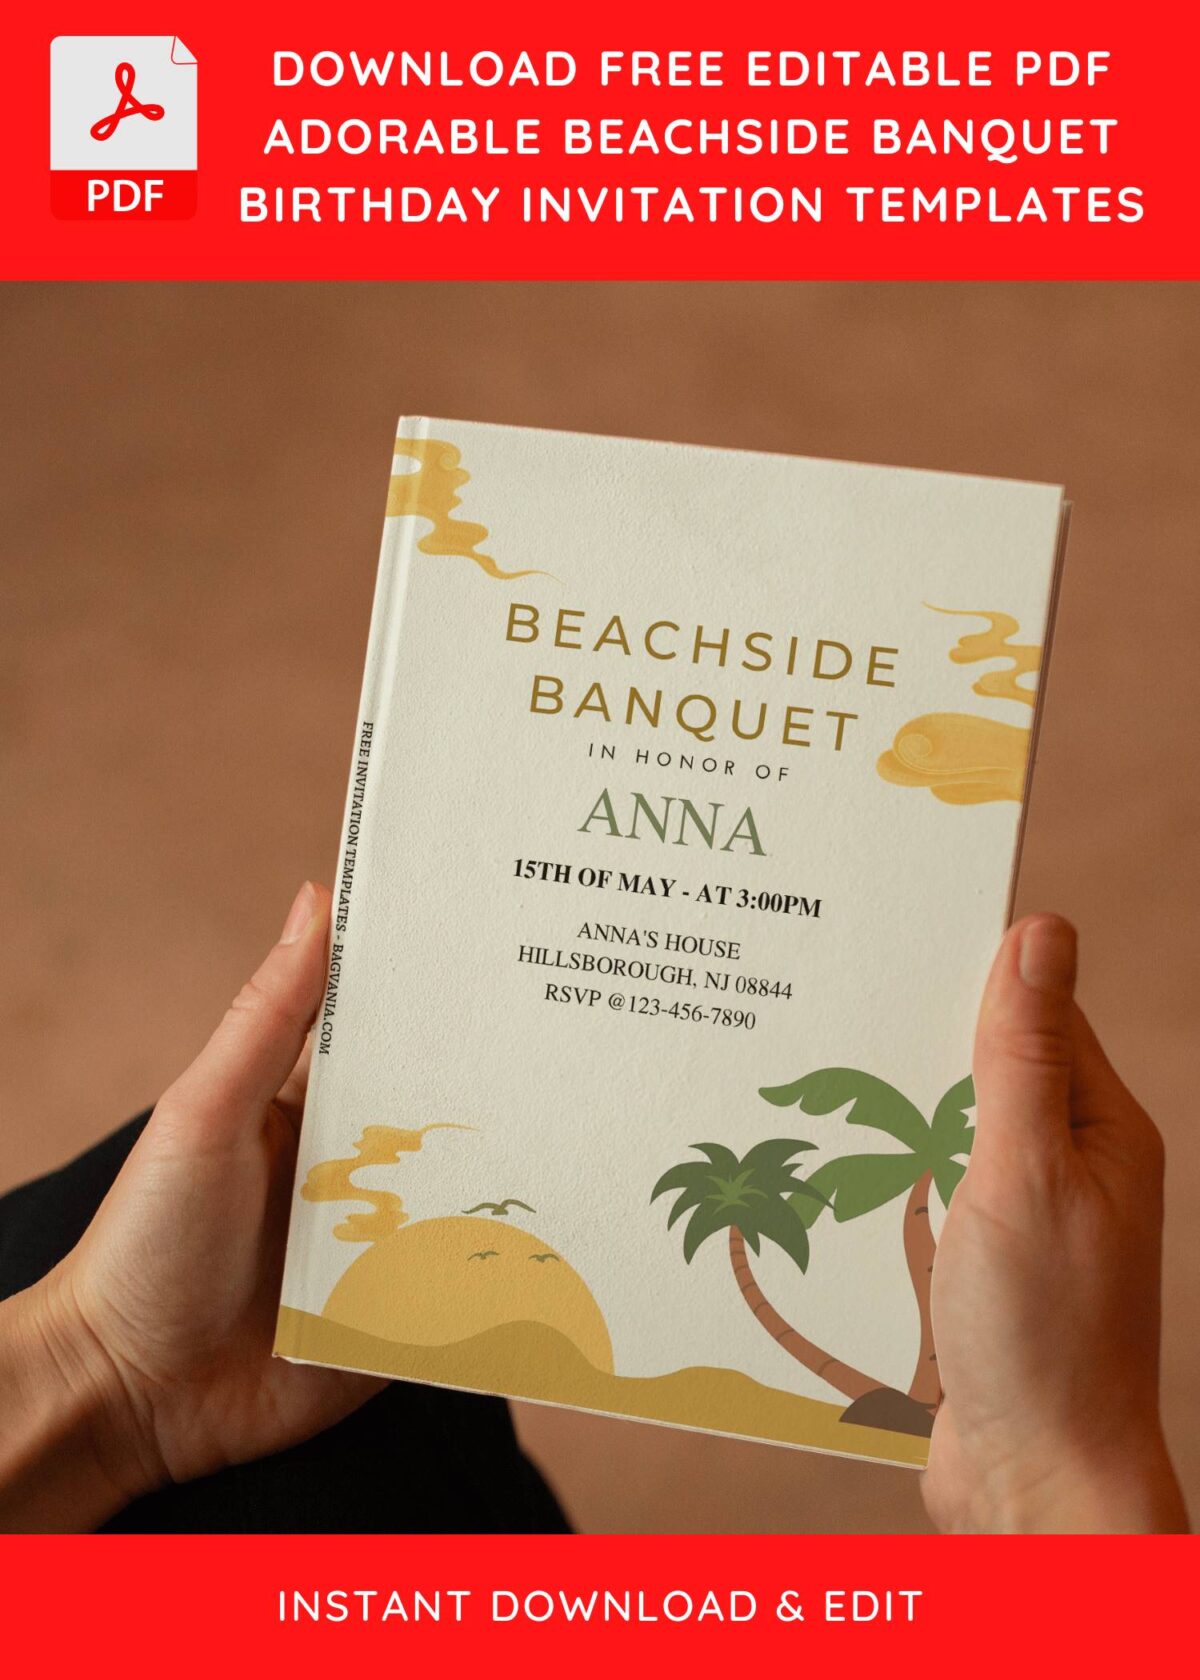 (Free Editable PDF) Summer Beachside Banquet Birthday Invitation Templates E